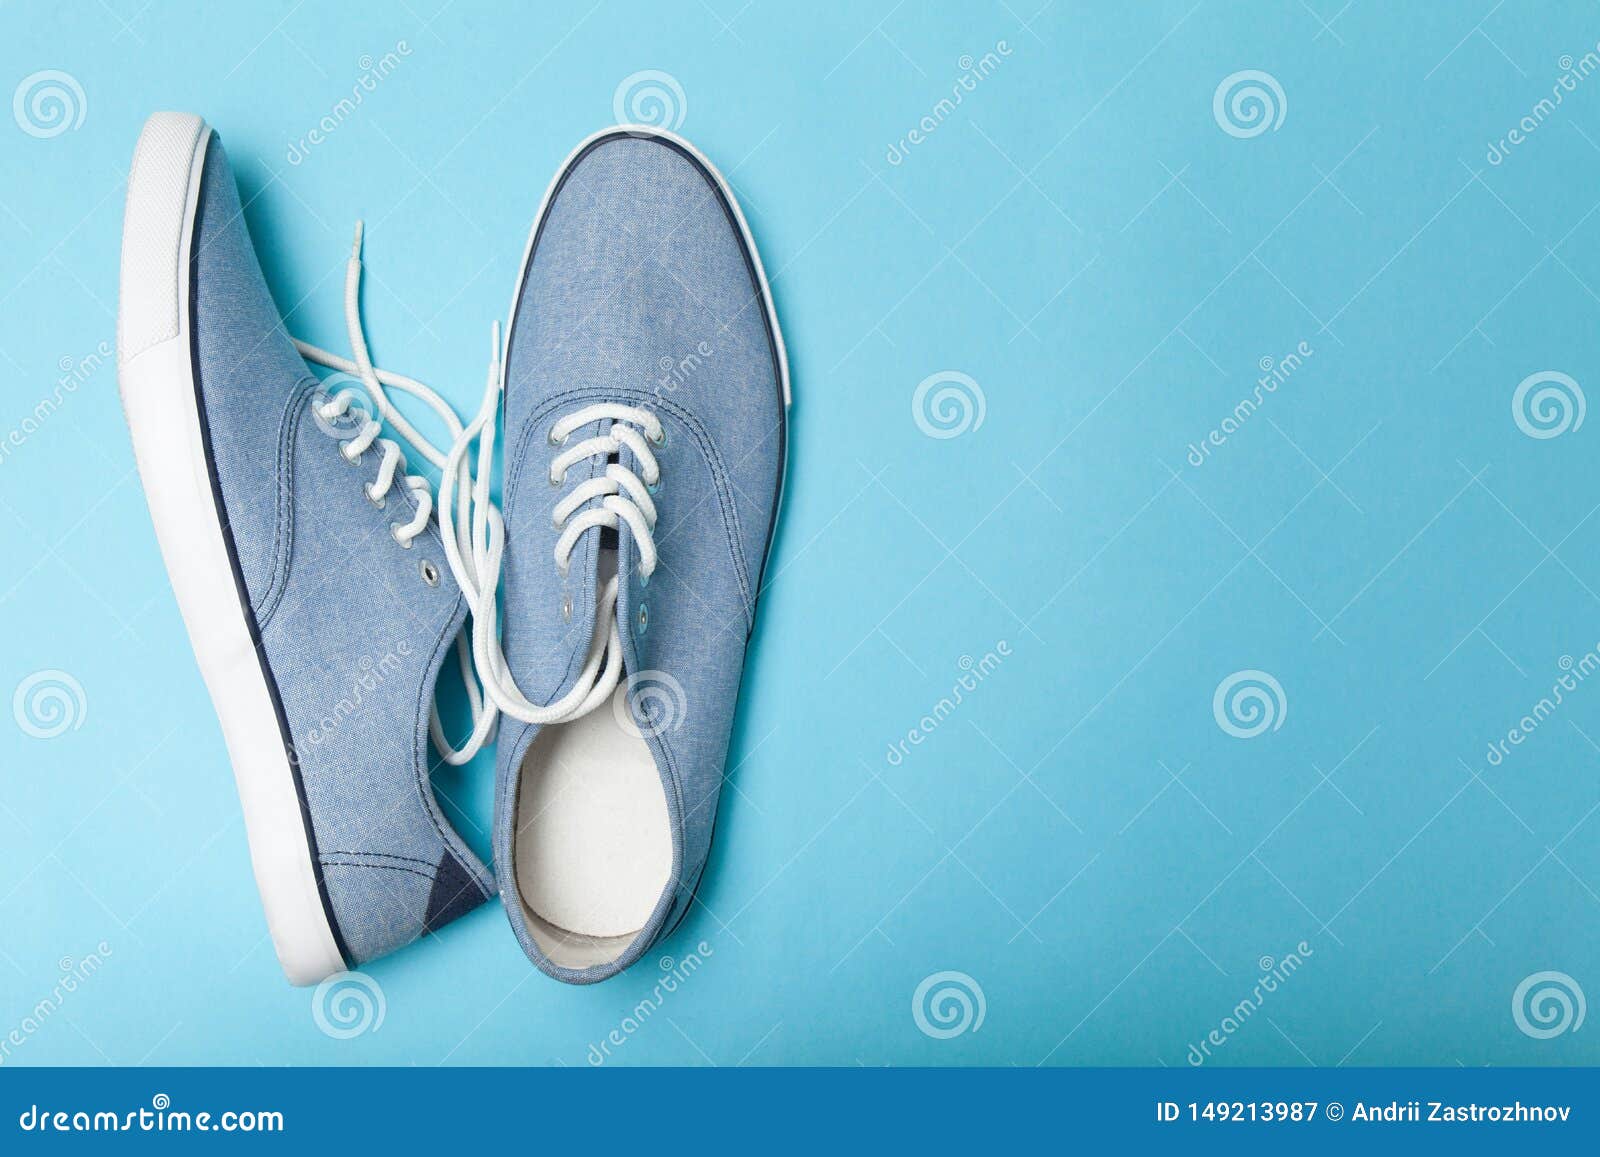 Blue Denim Canvas Casual Shoes Stock Image - Image of shoelace ...